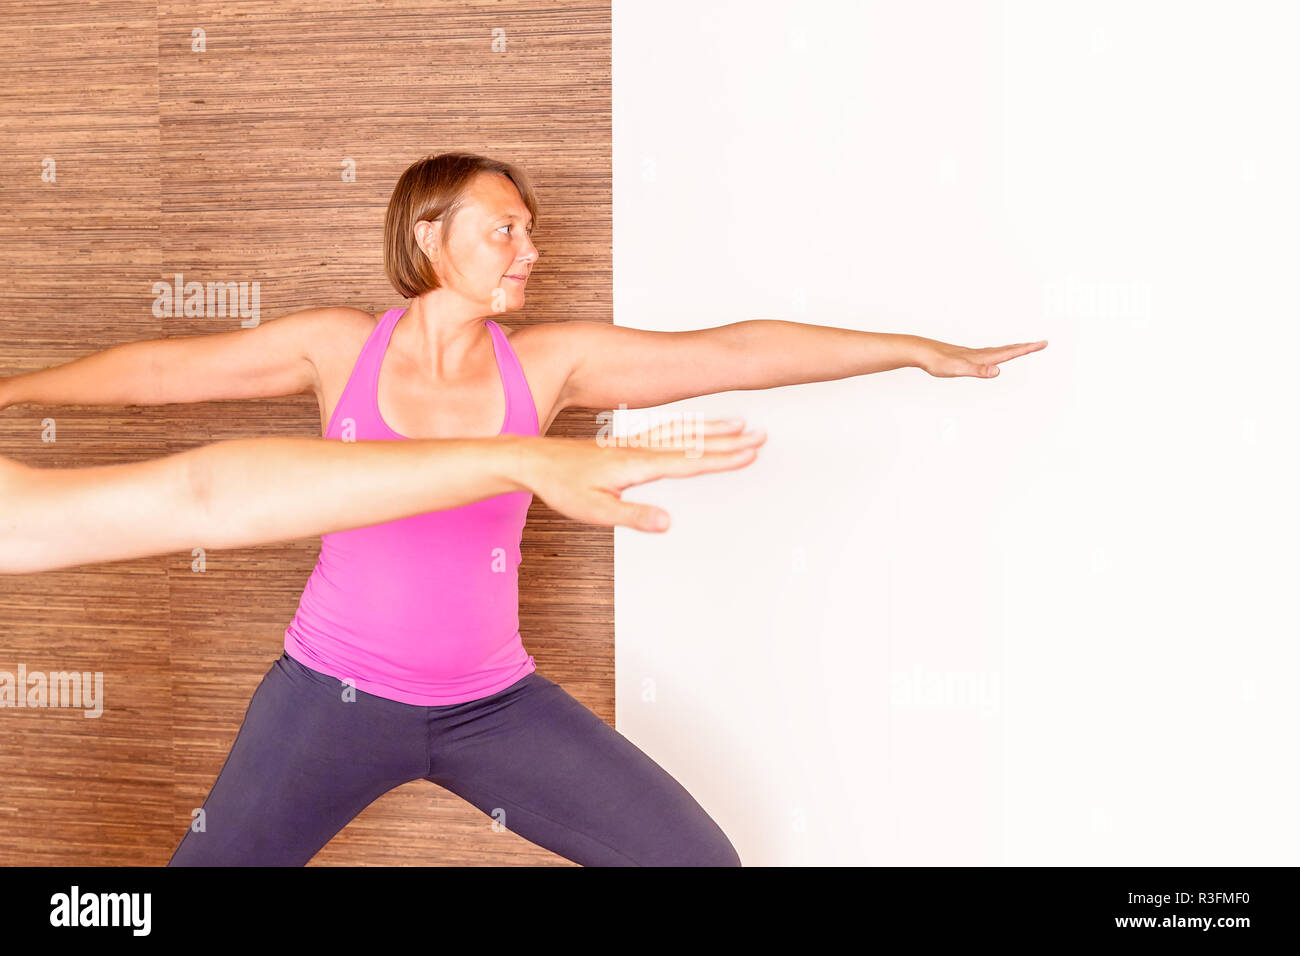 yoga exercises Stock Photo